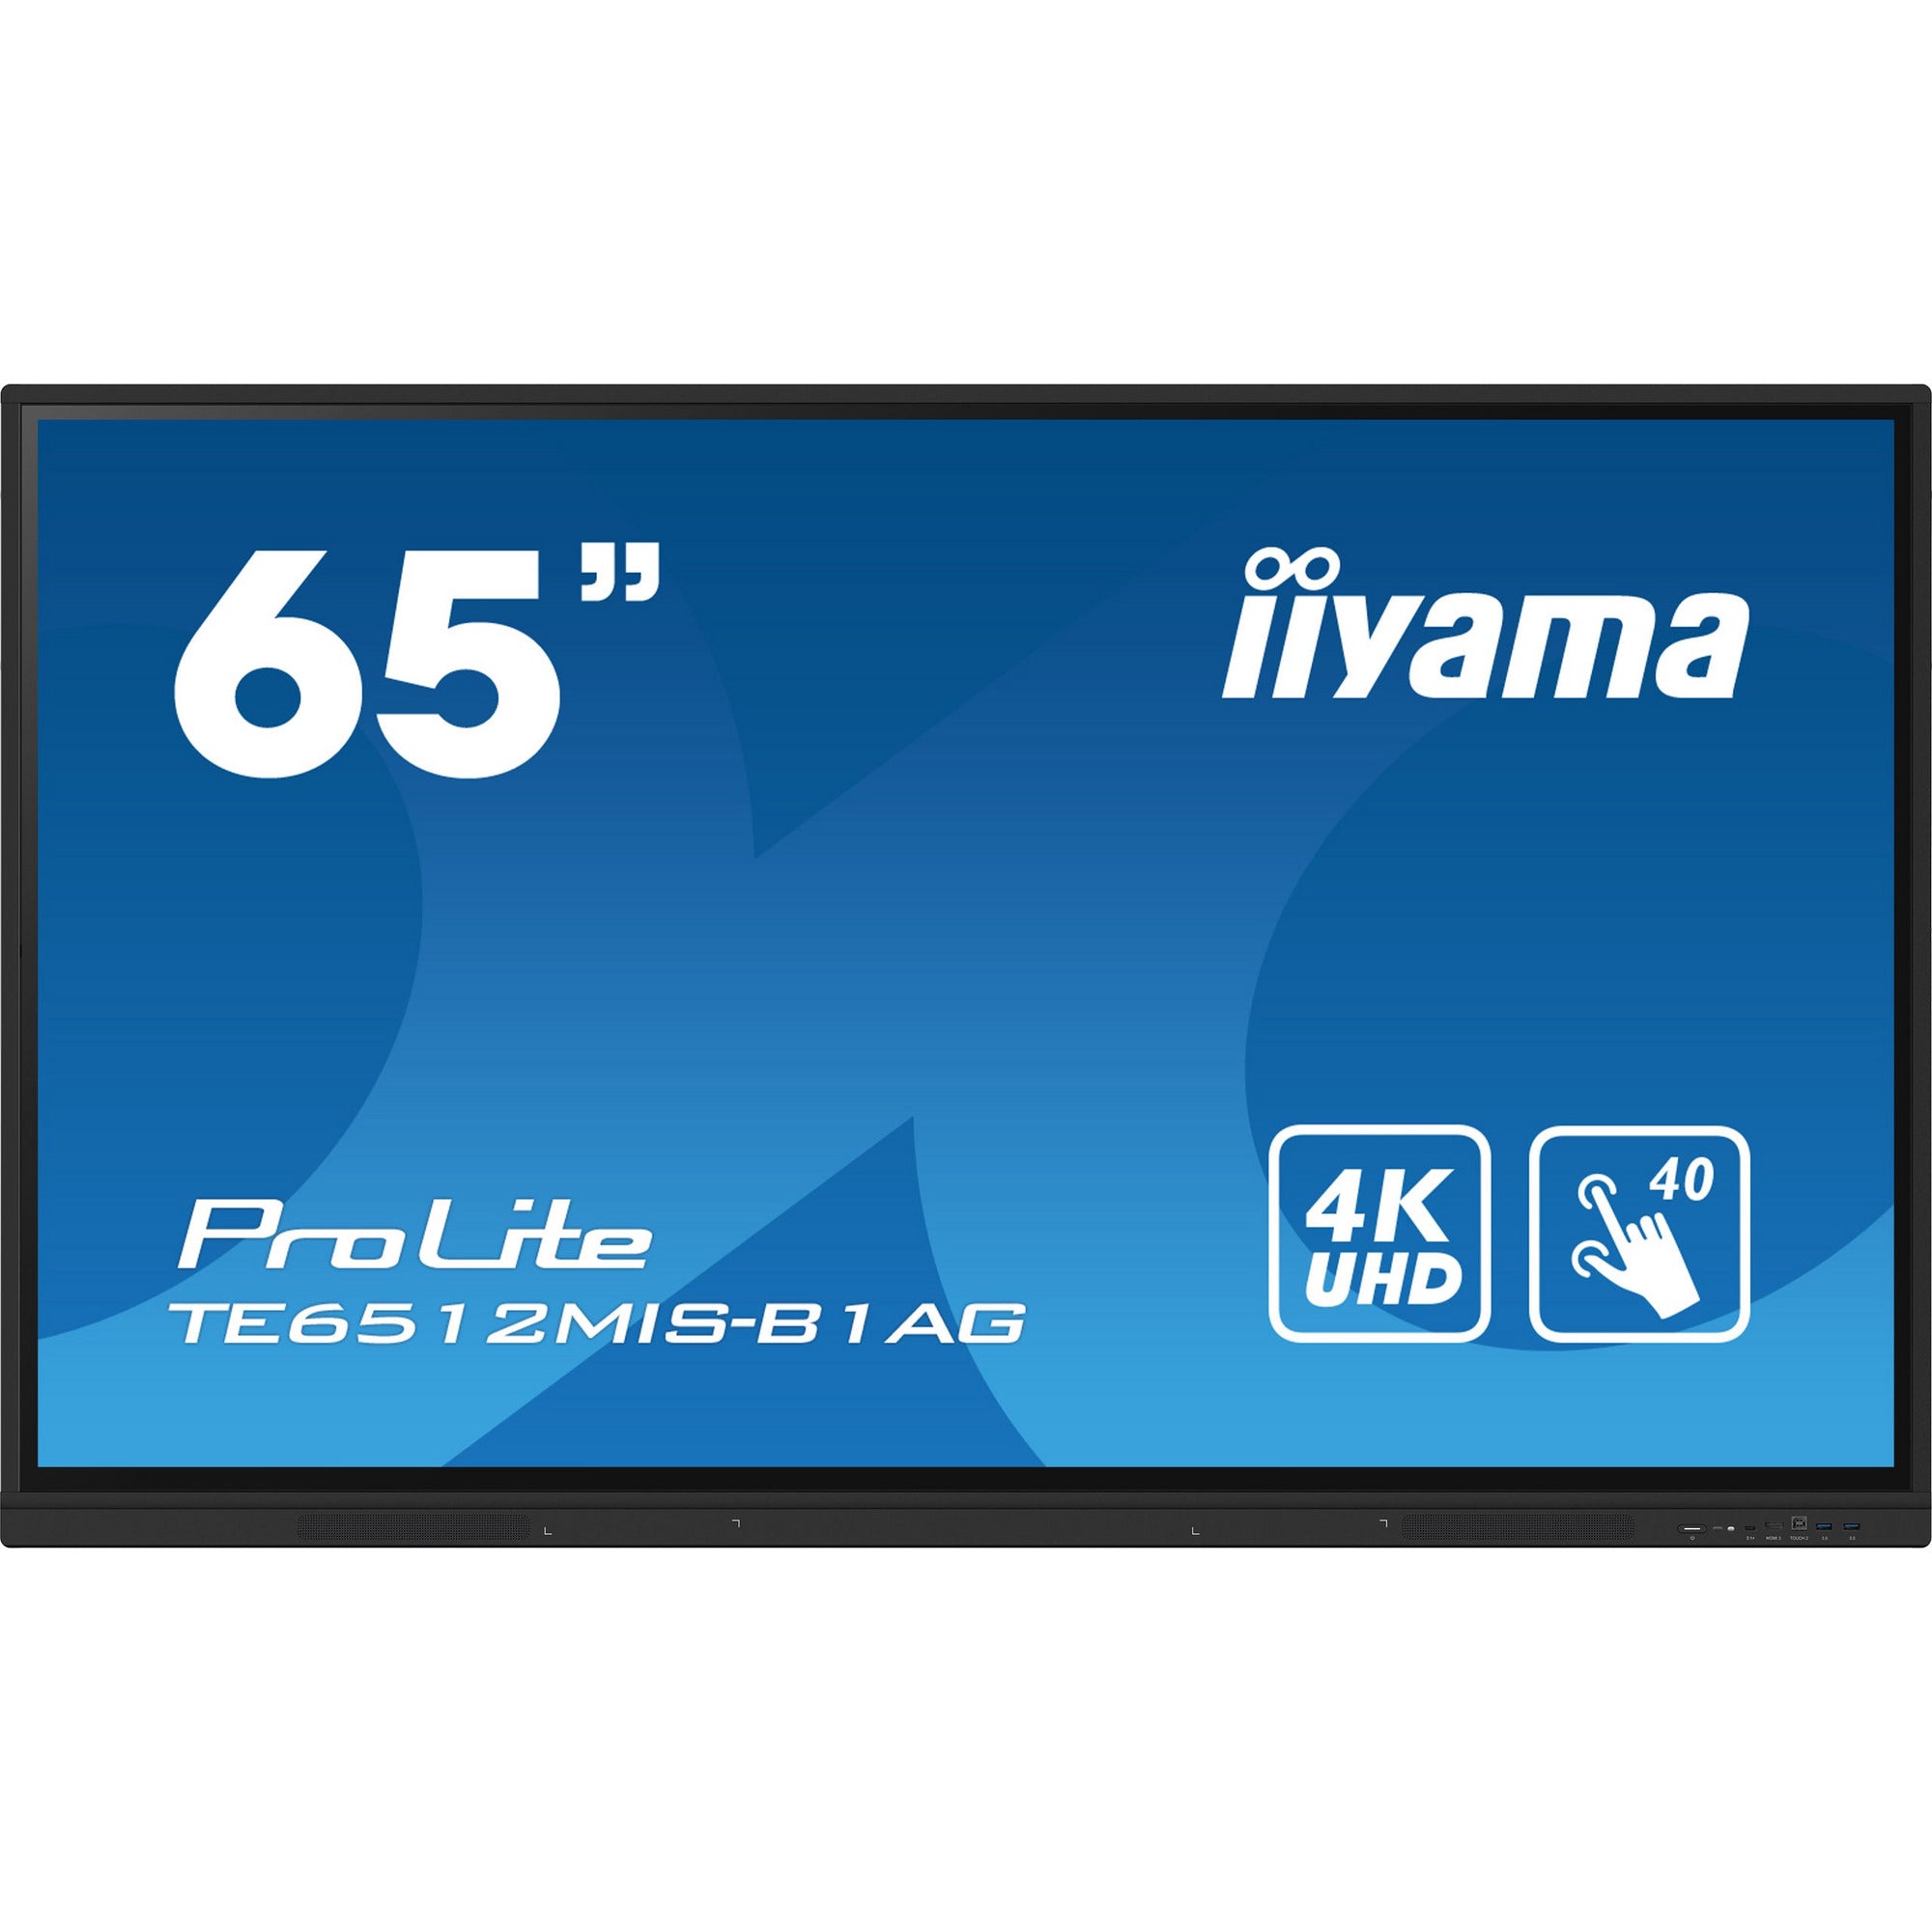 Iiyama ProLite TE6512MIS-B1AG 65" Interactive 4K UHD Touchscreen featuring a 4K interface with User Profiles